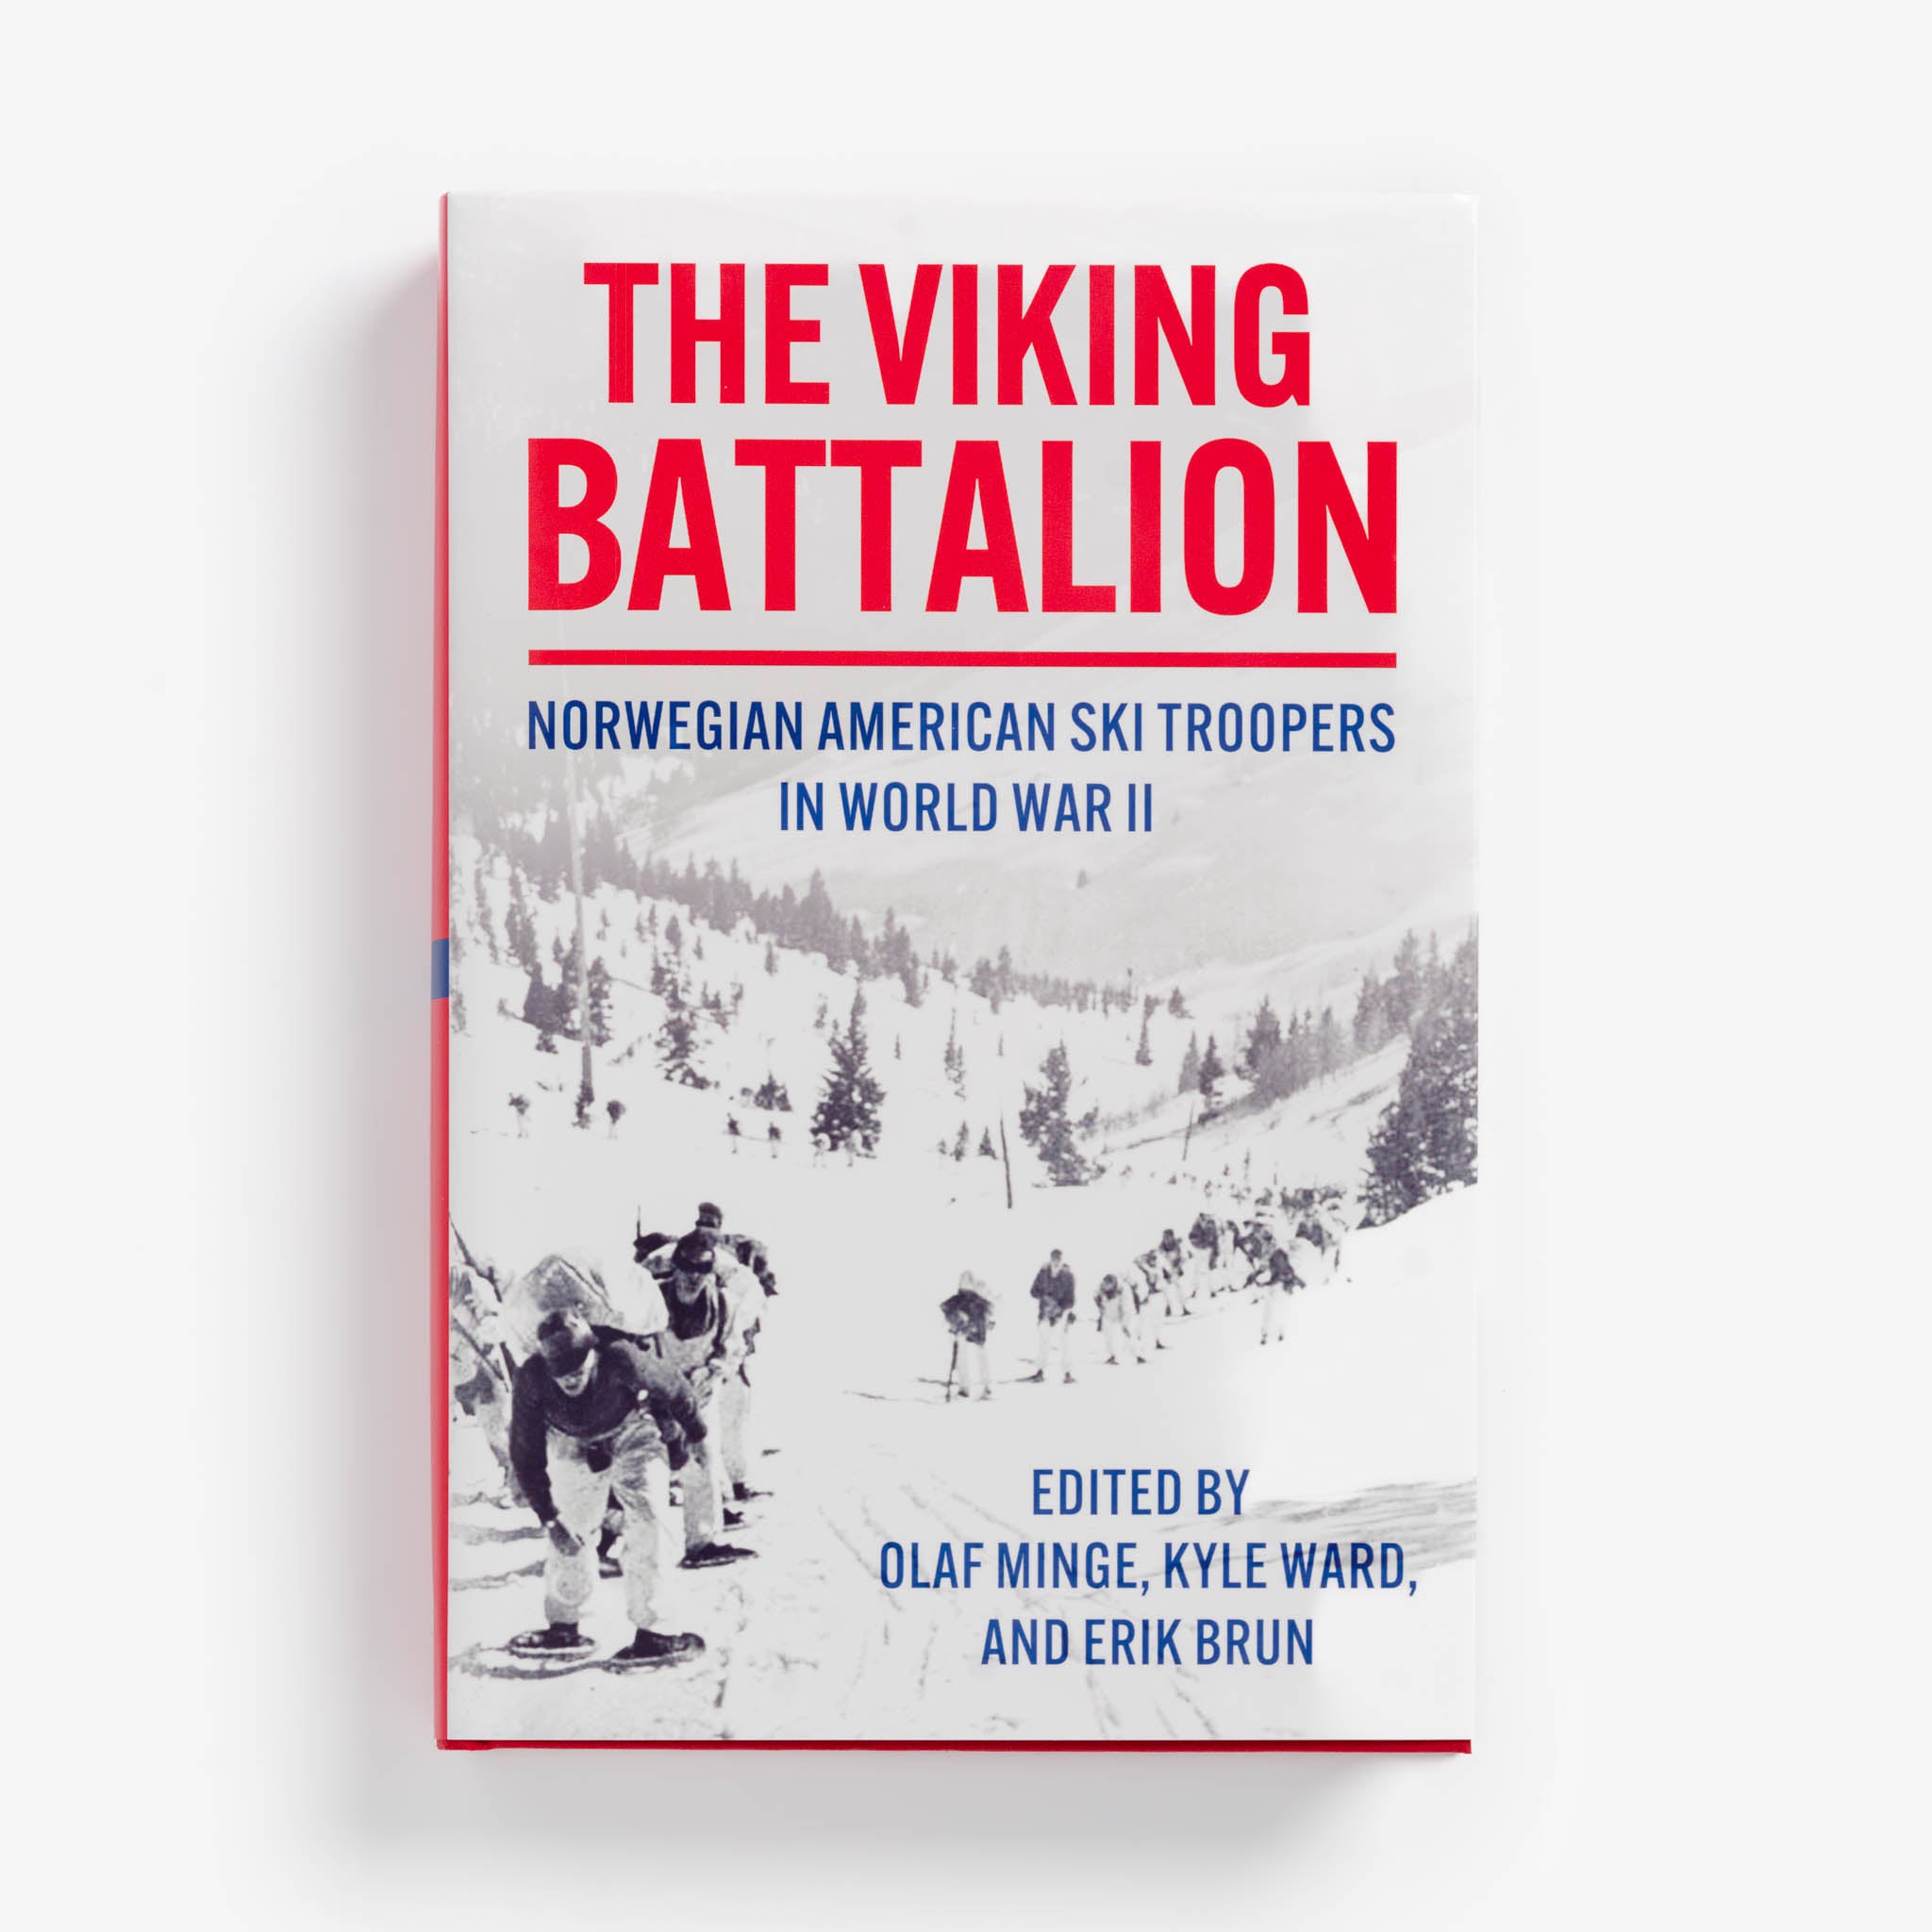 The Viking Battalion Edited by Olaf Minge, Dr Kyle Ward, and Erik Brun